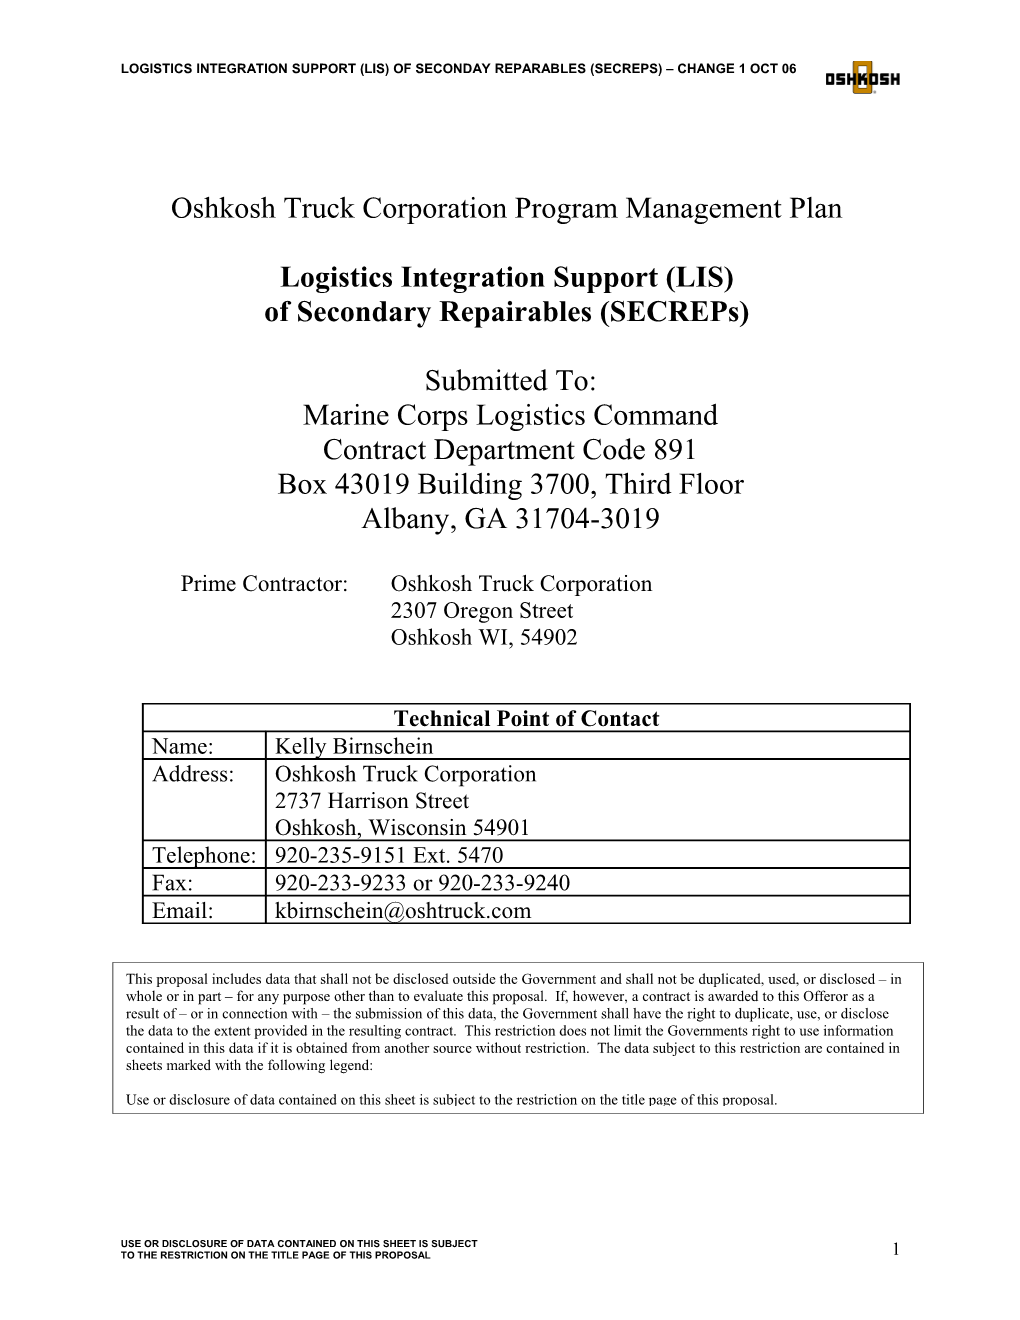 Oshkosh Truck Corporation Program Management Plan